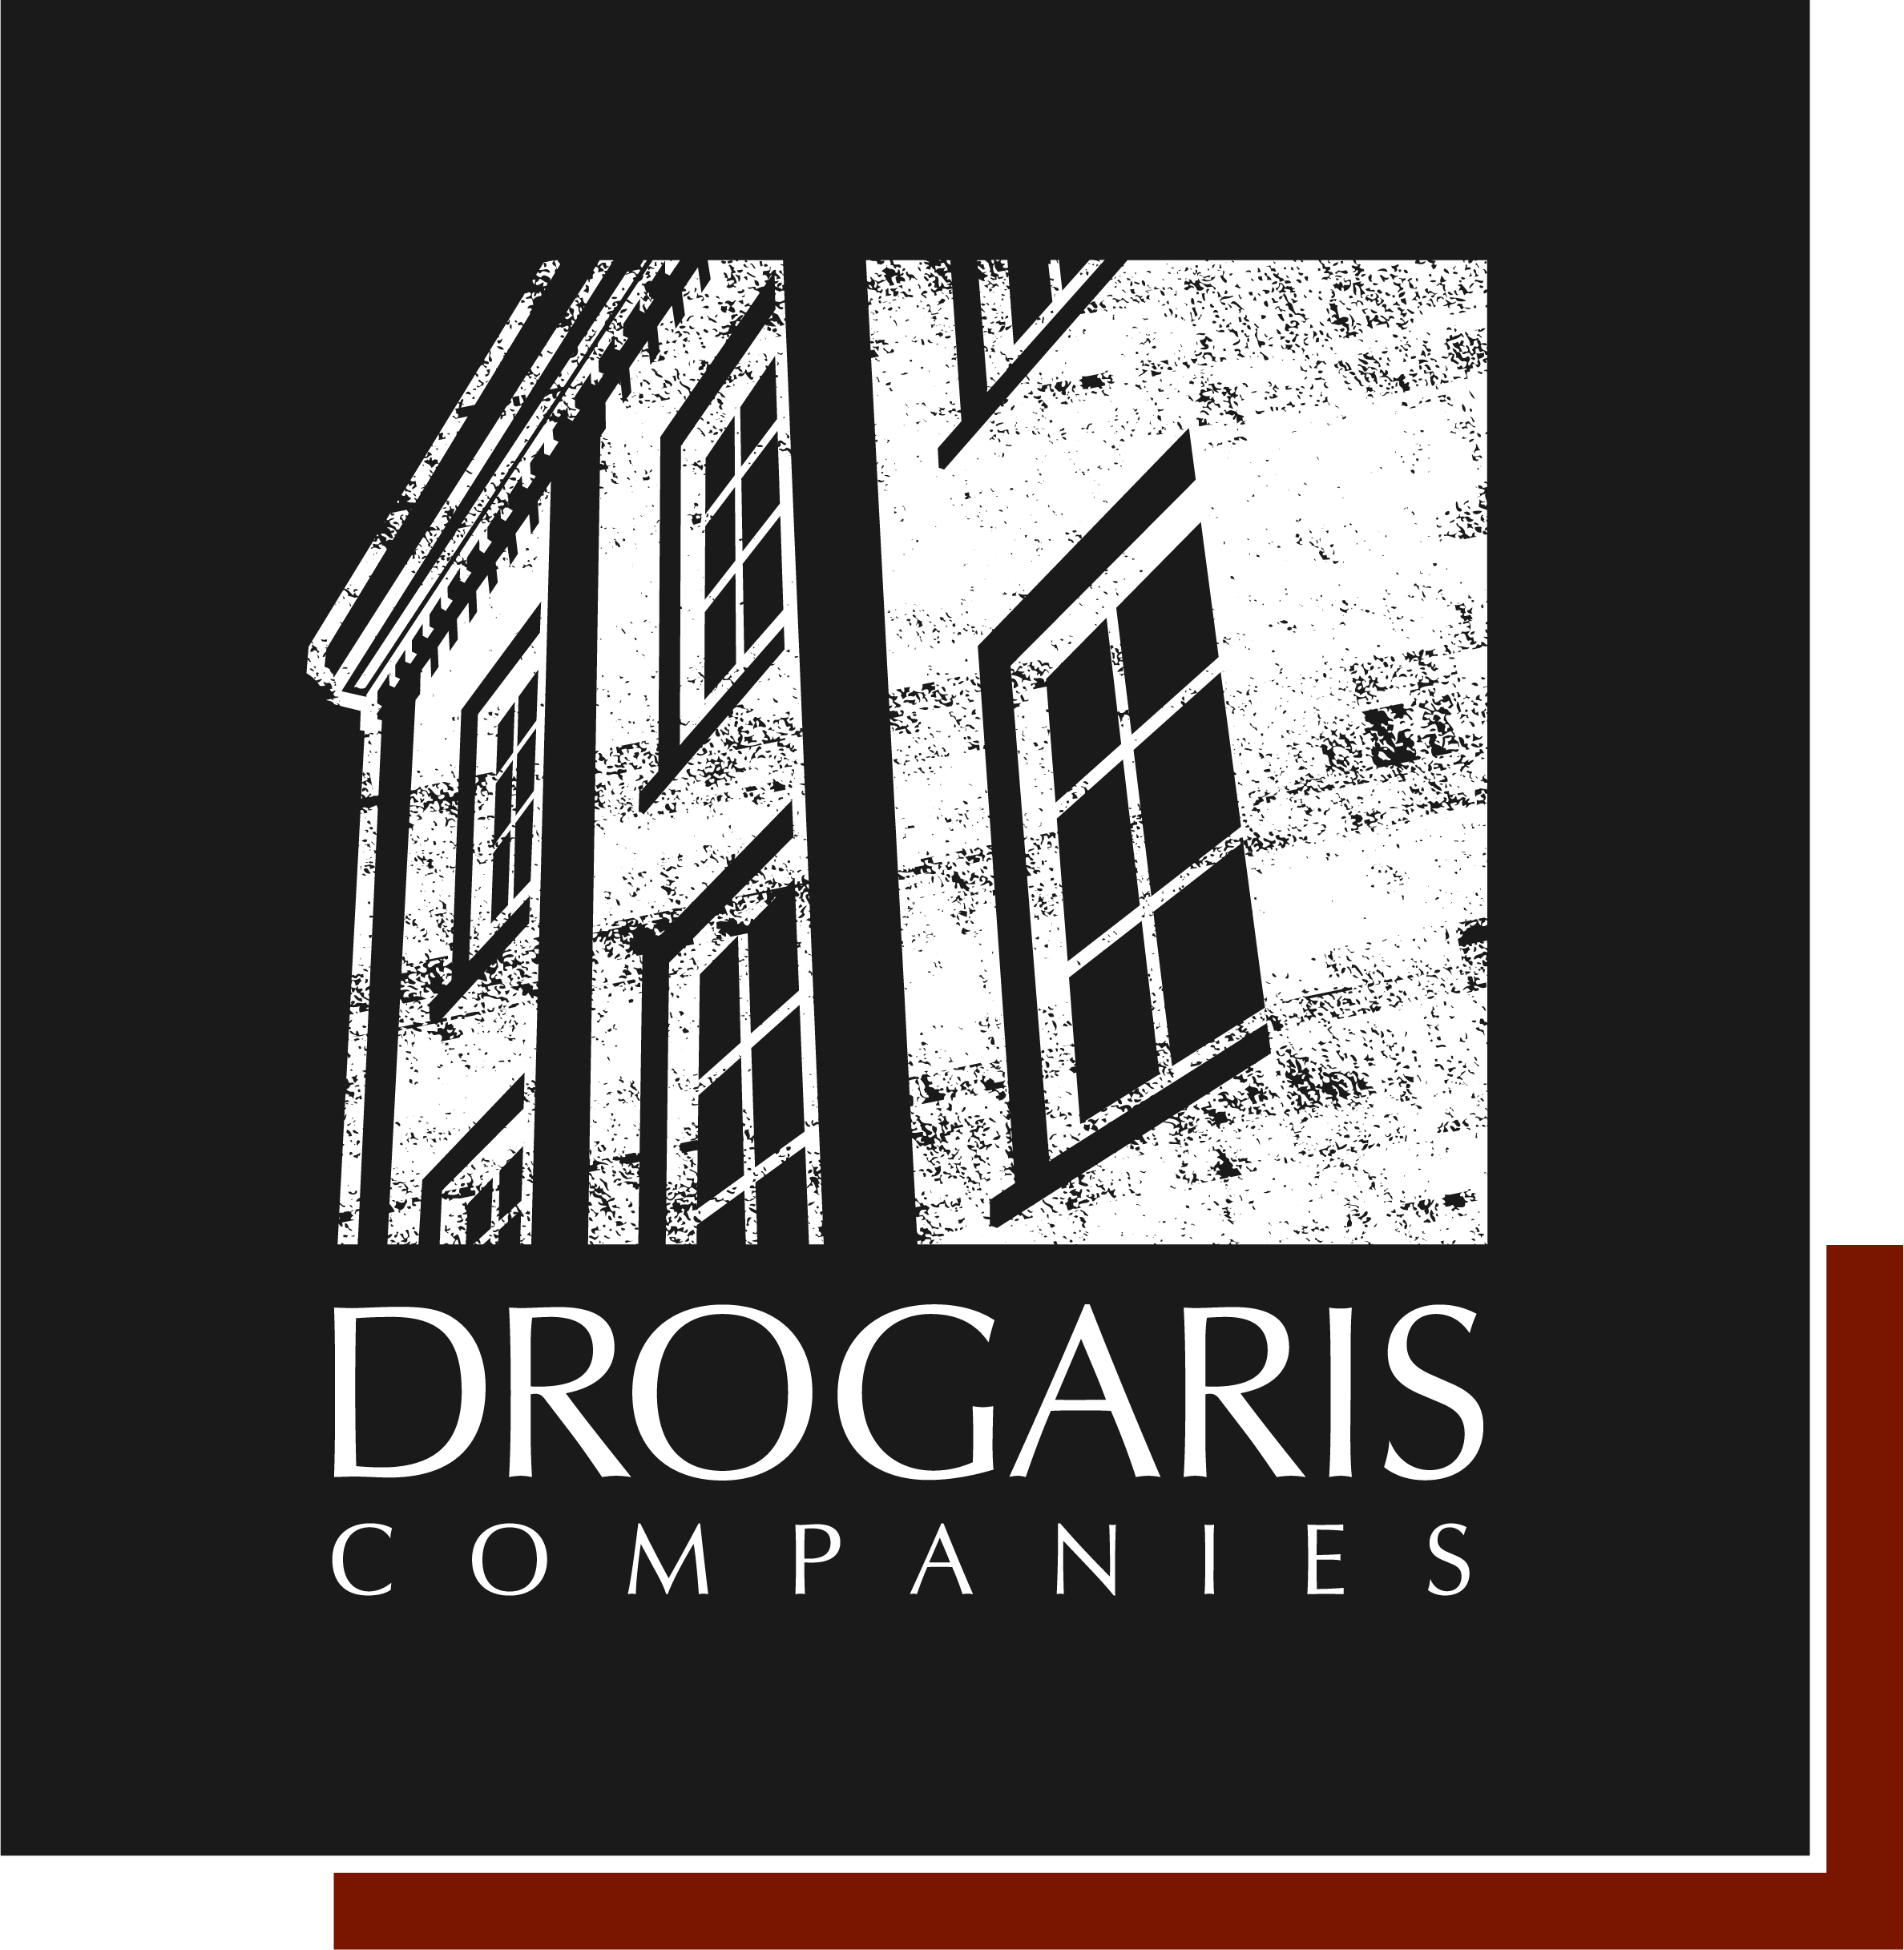 Drogaris Companies